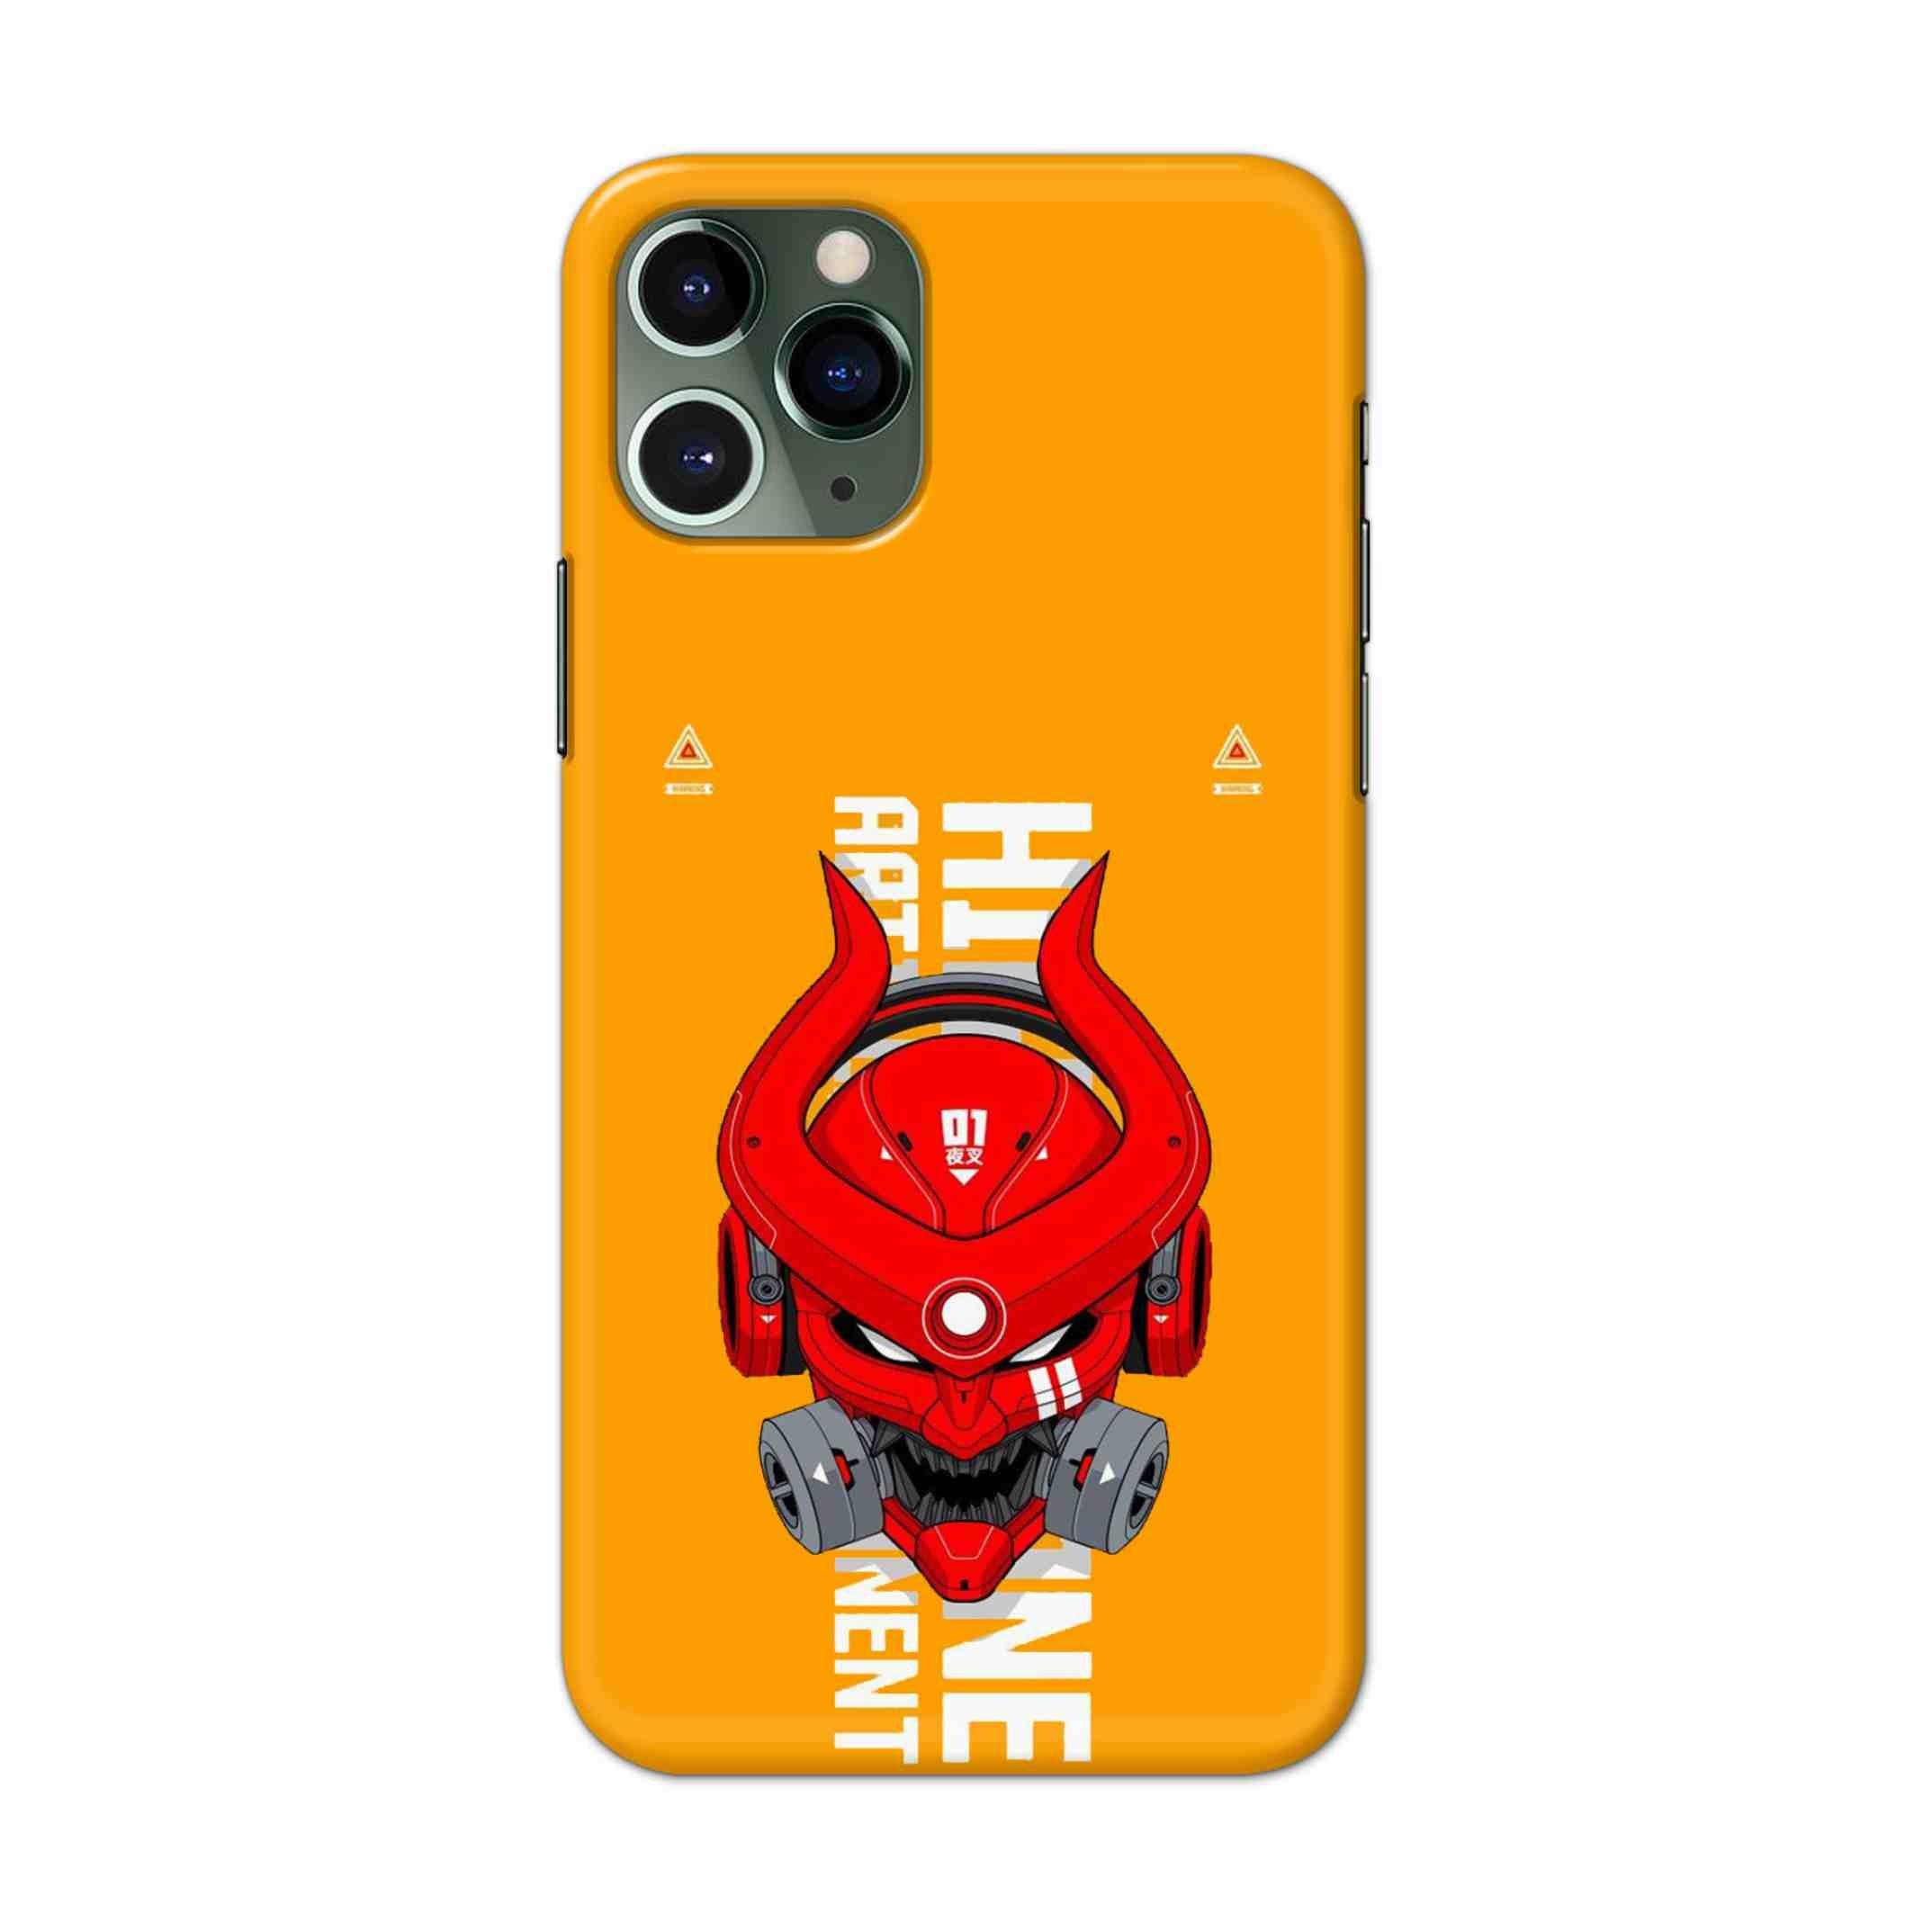 Buy Bull Skull Hard Back Mobile Phone Case/Cover For iPhone 11 Pro Max Online